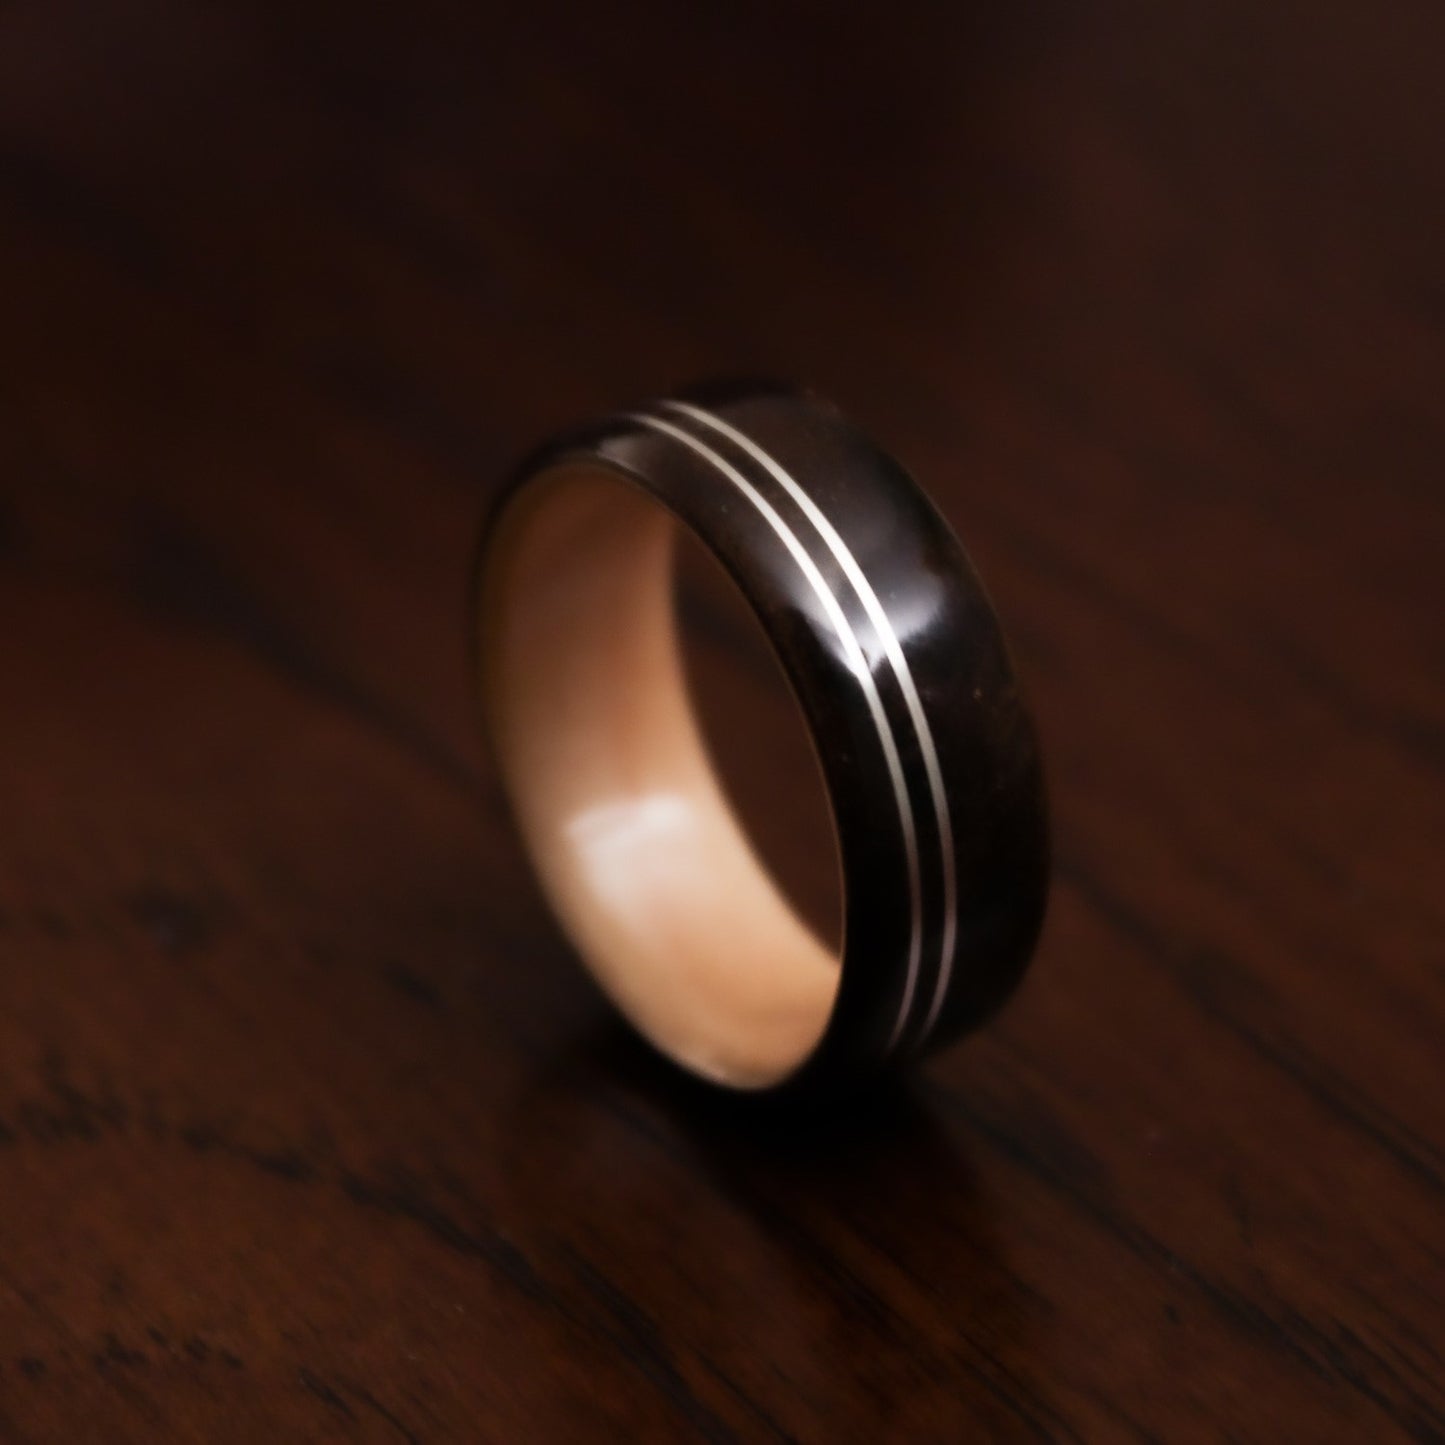 wooden wedding ring